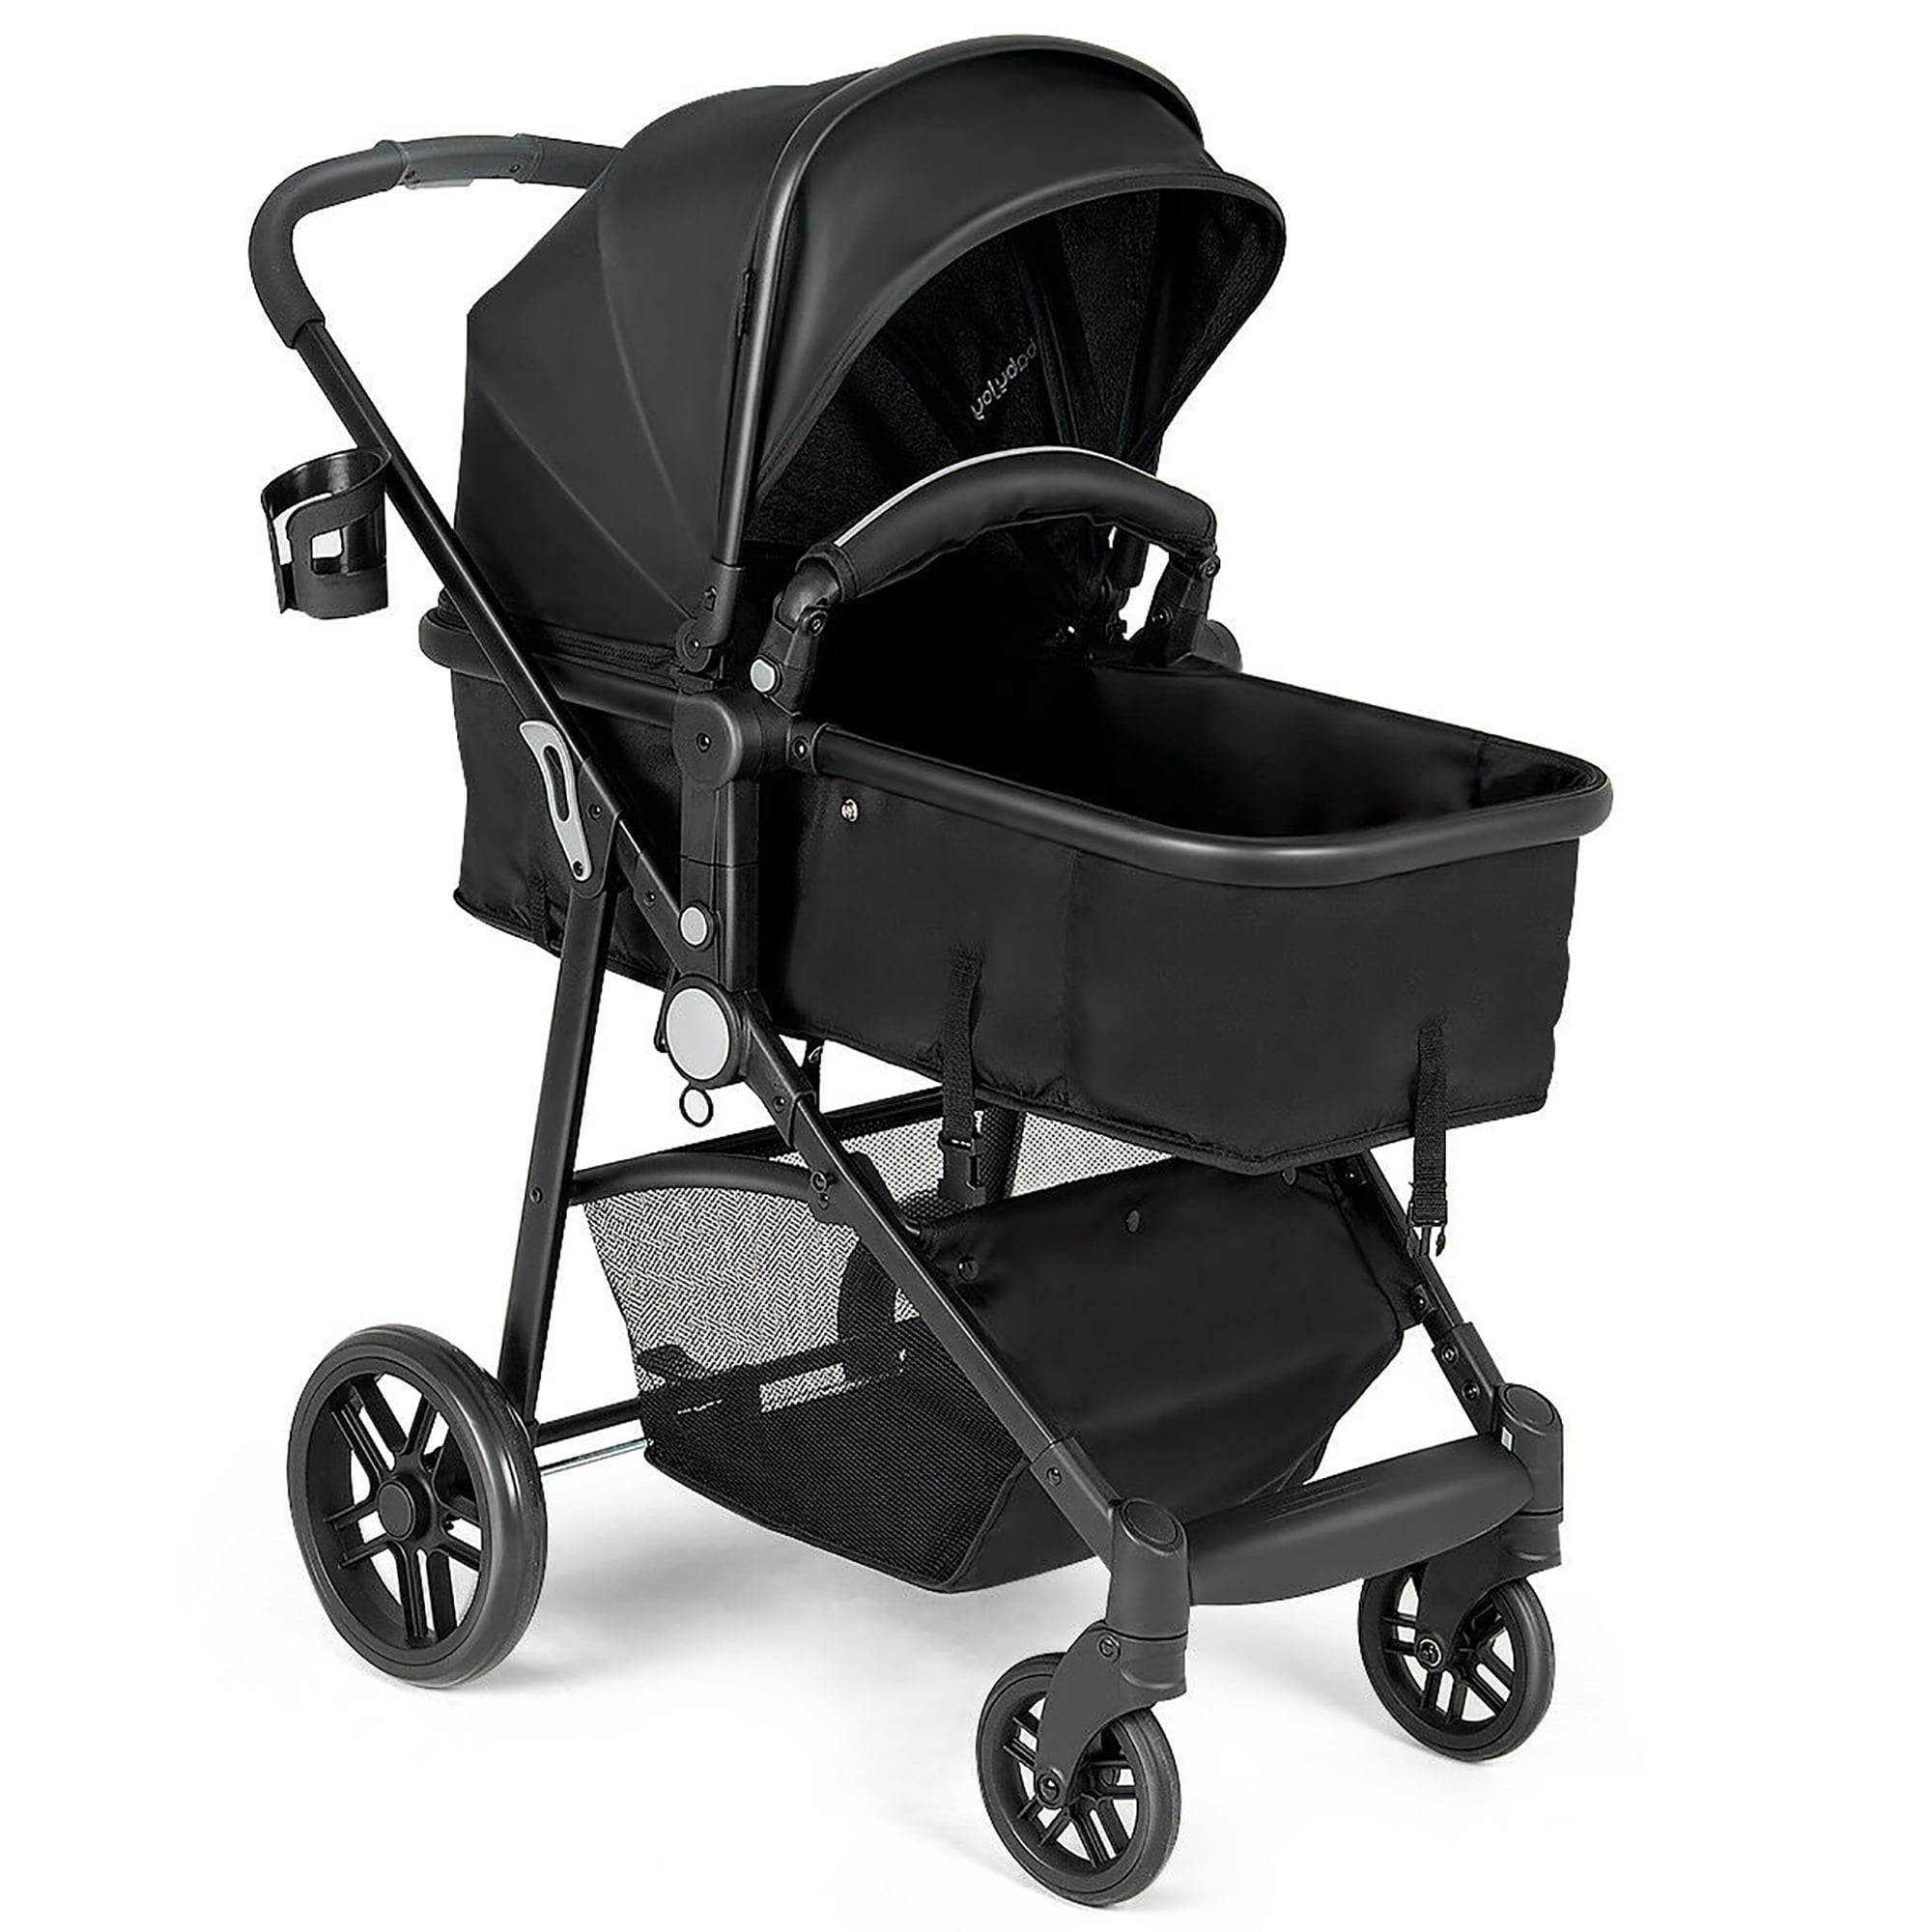 Classic Baby Pram Pushchair 2in1 or 3in1 stroller travel system Black 41 